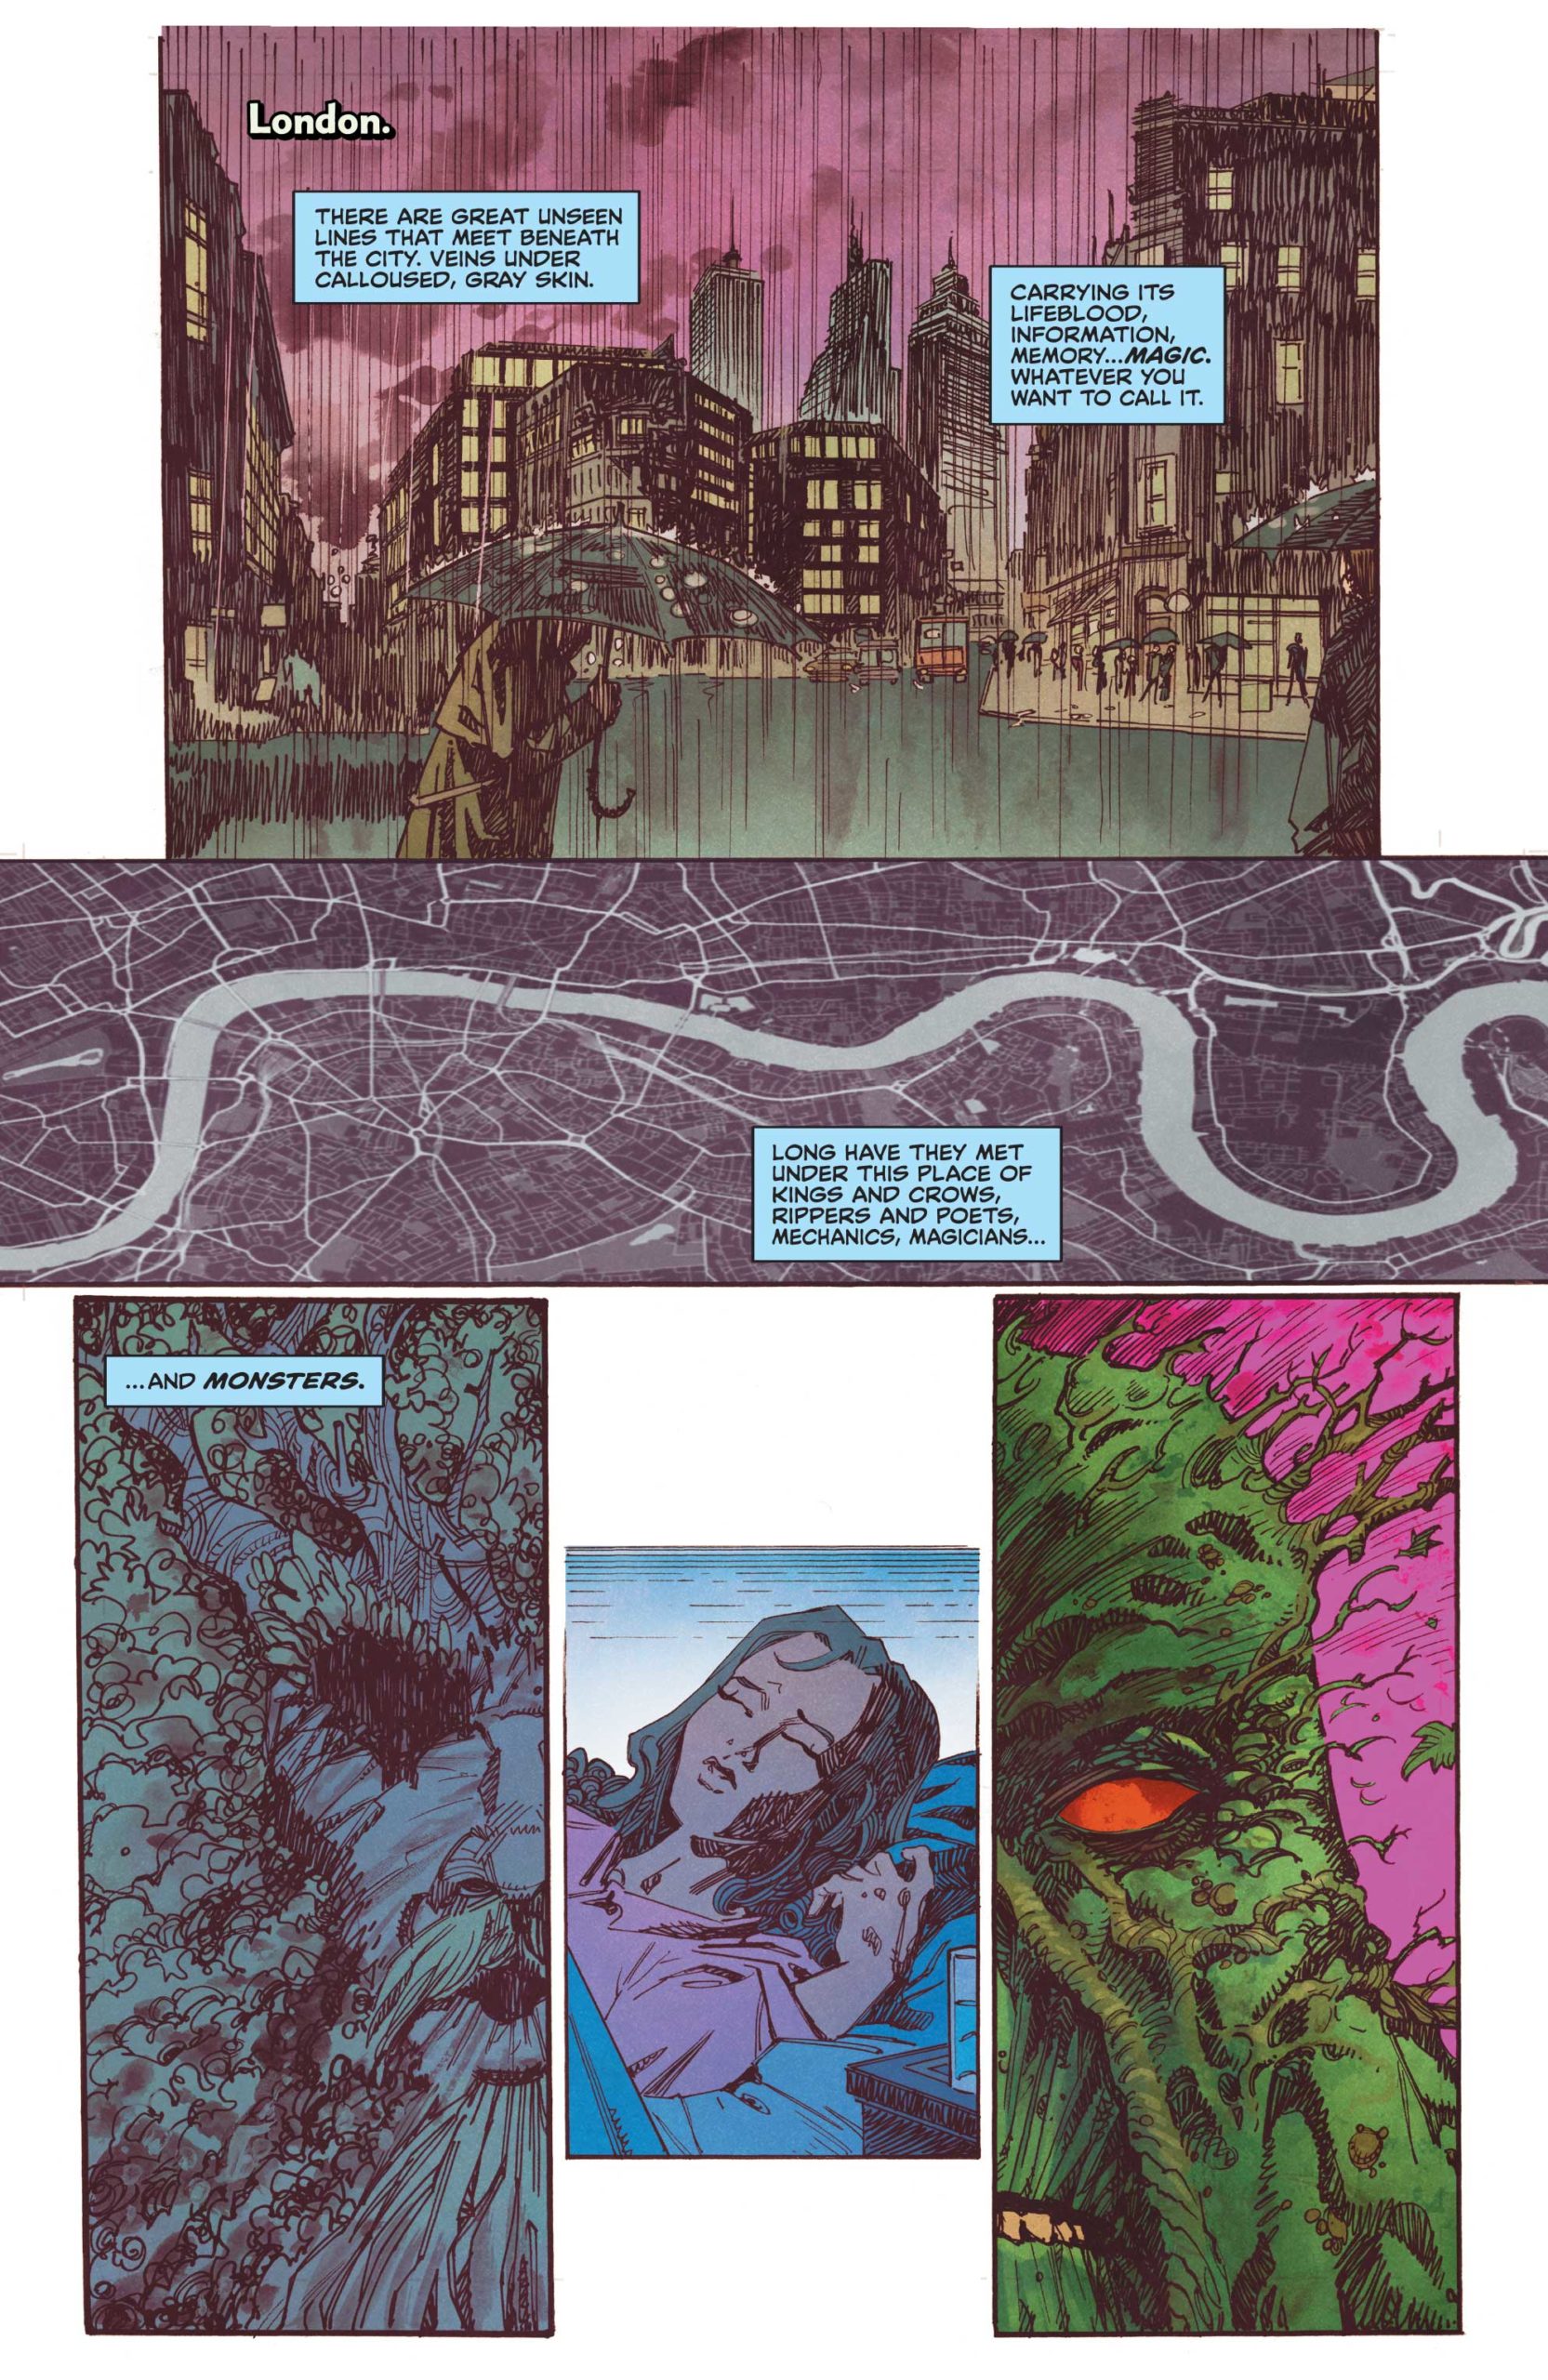 The Swamp Thing 5 DC Comics News